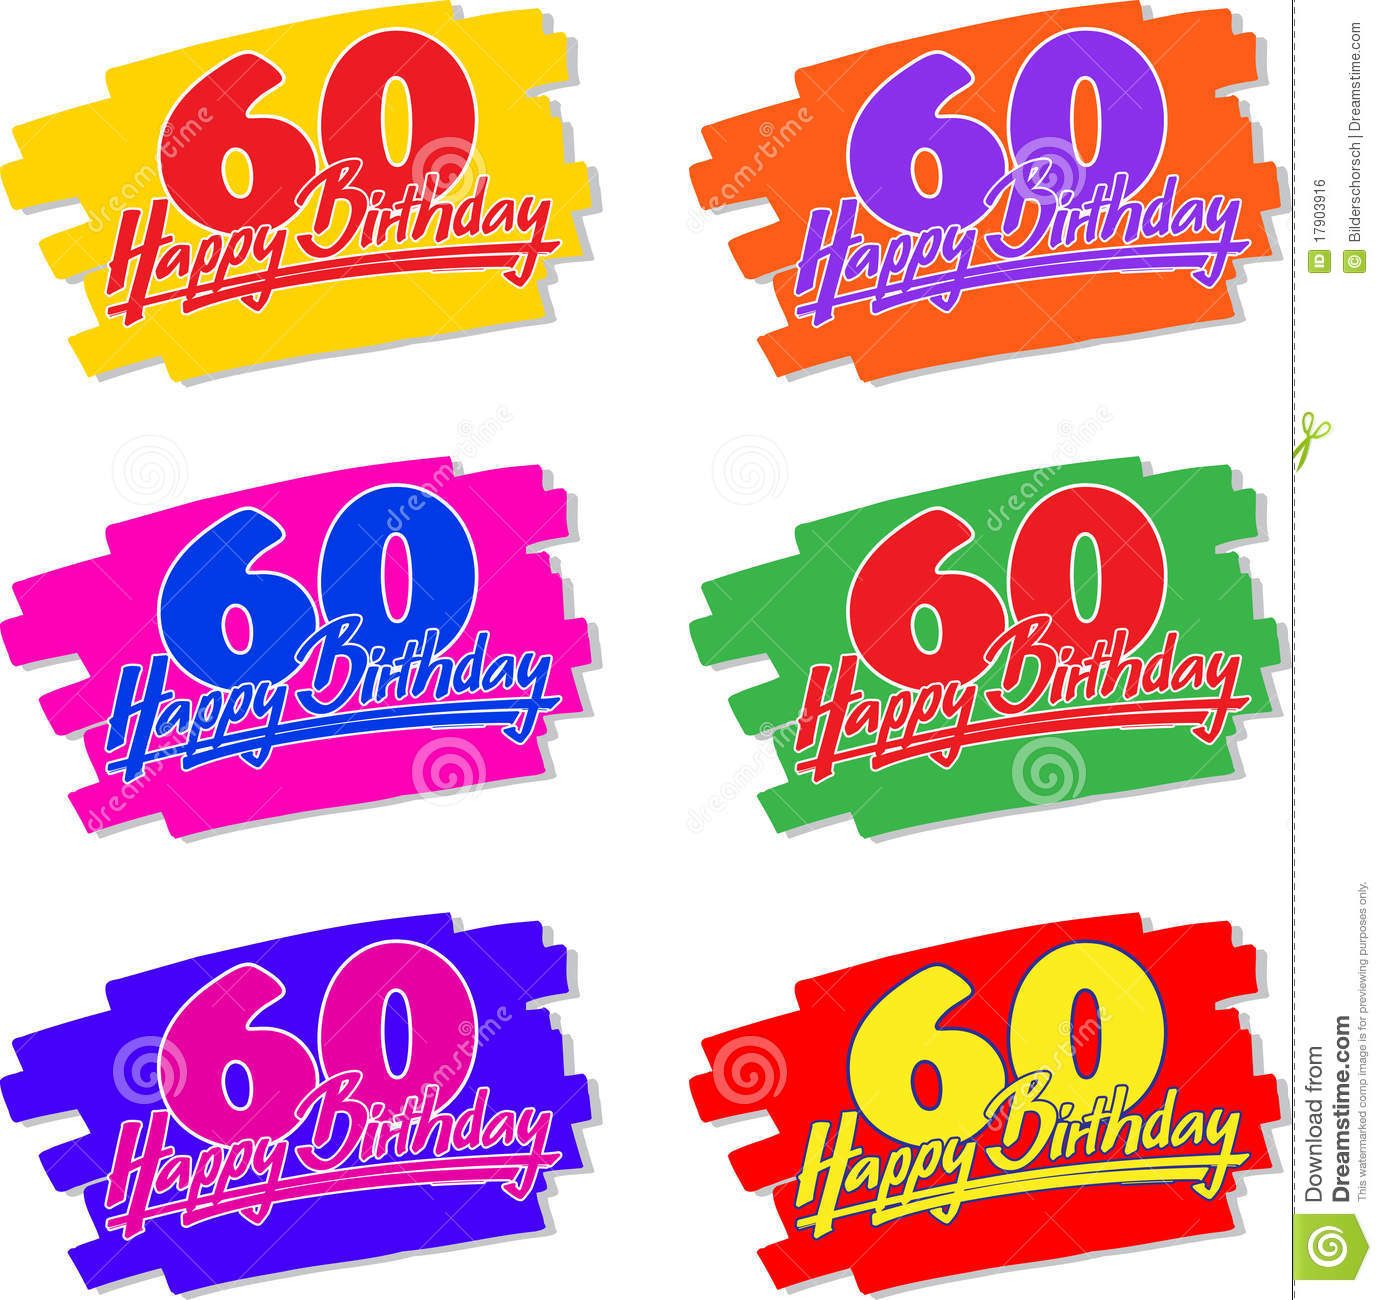 Happy Birthday 60 Hand Drawn Royalty Free Stock Image   Image    